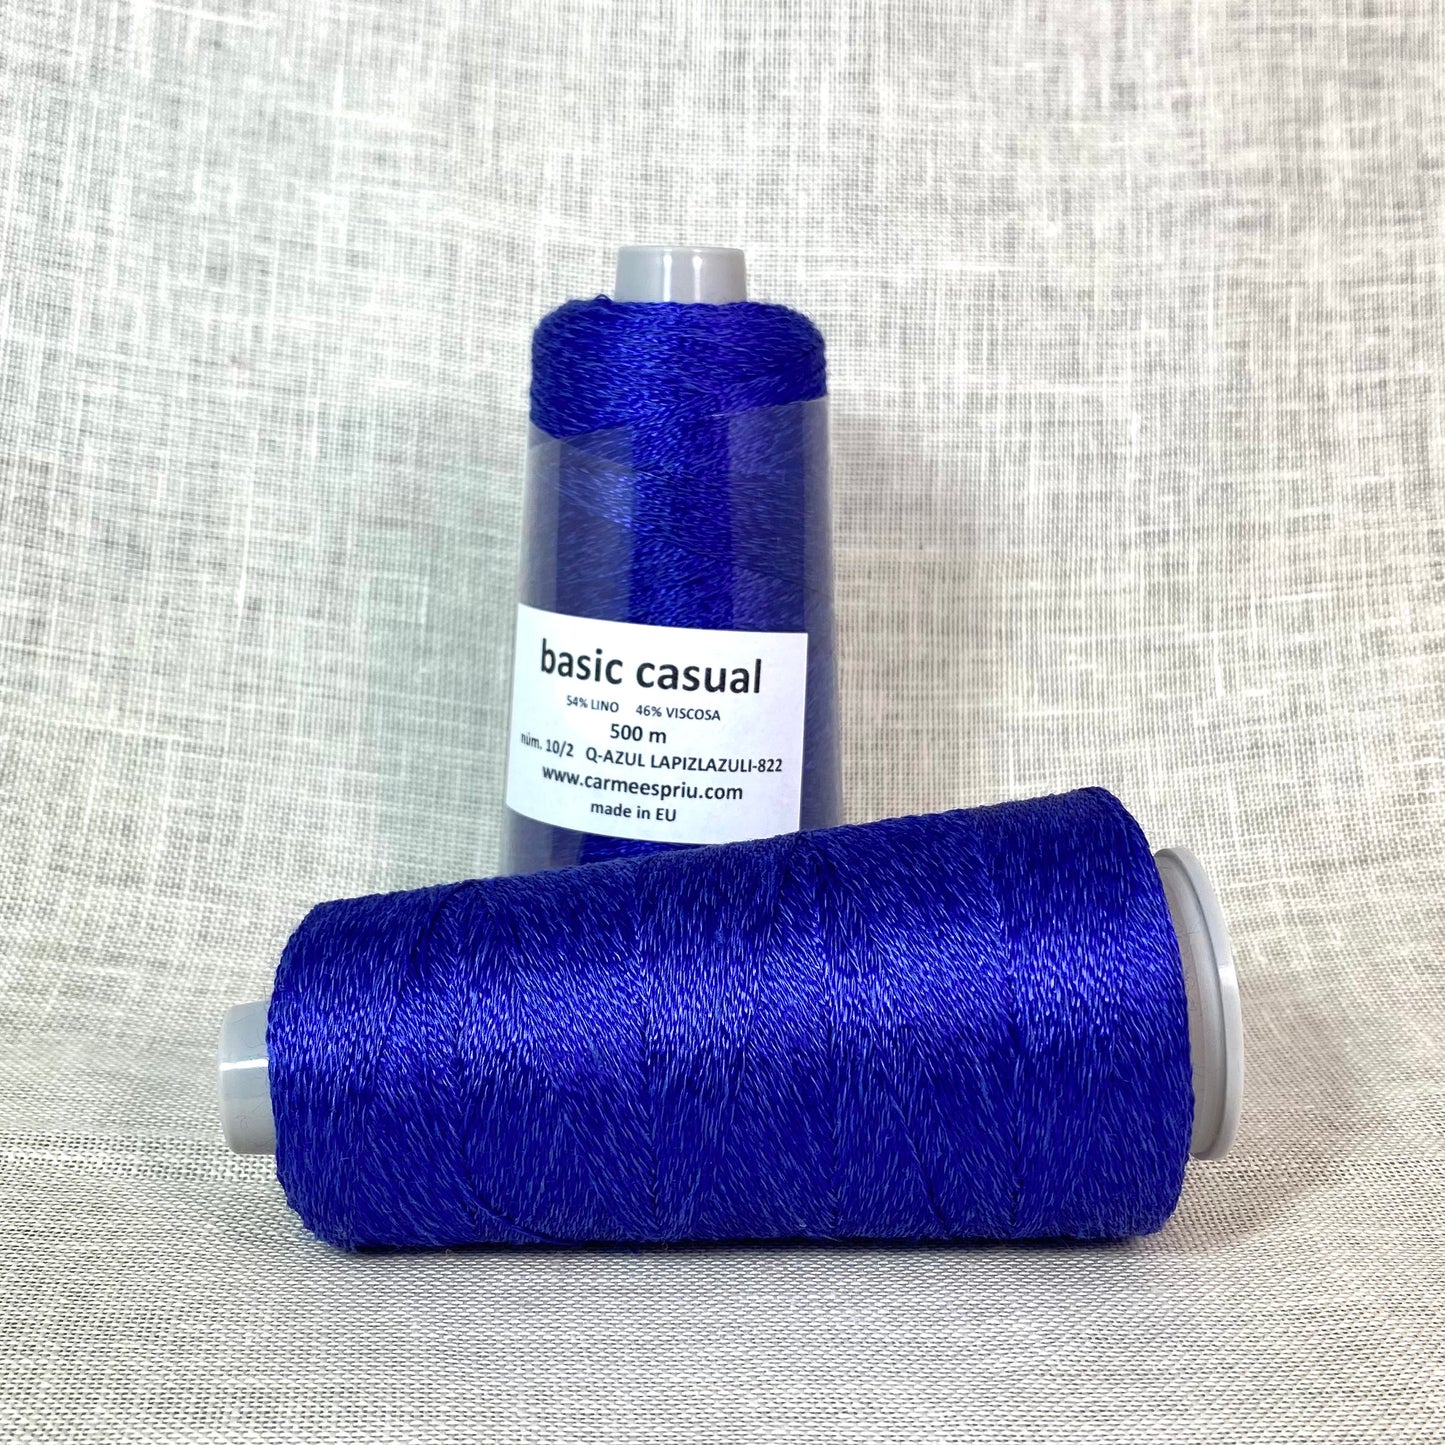 basic casual azul lapiz-lazuli color 822